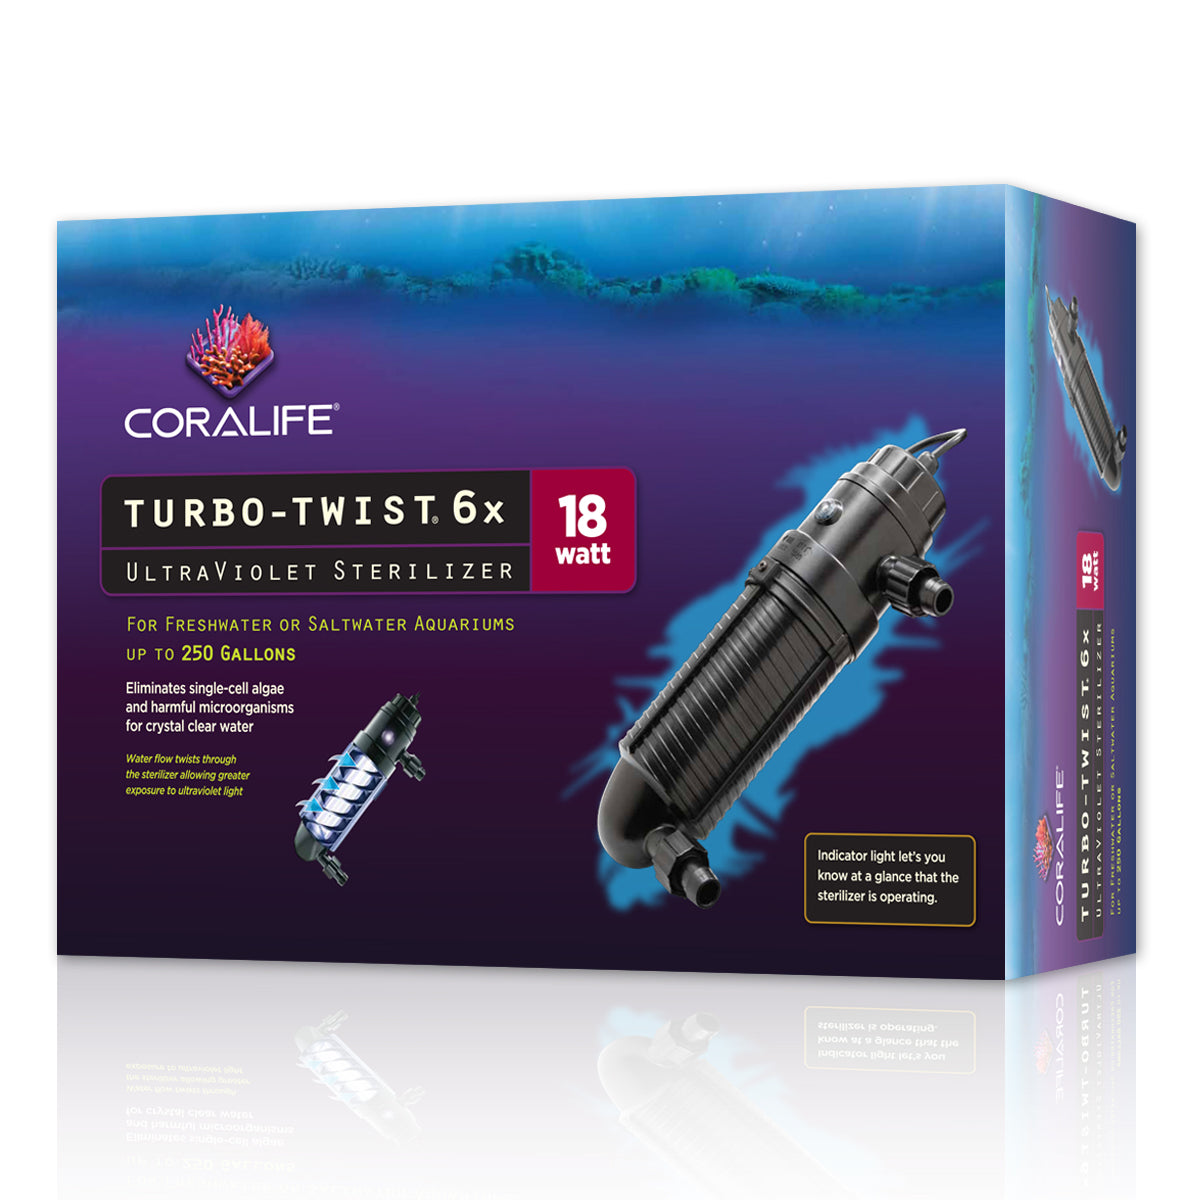 Coralife Turbo-Twist UV Sterilizer - 6x - 18 W - 250 Gal